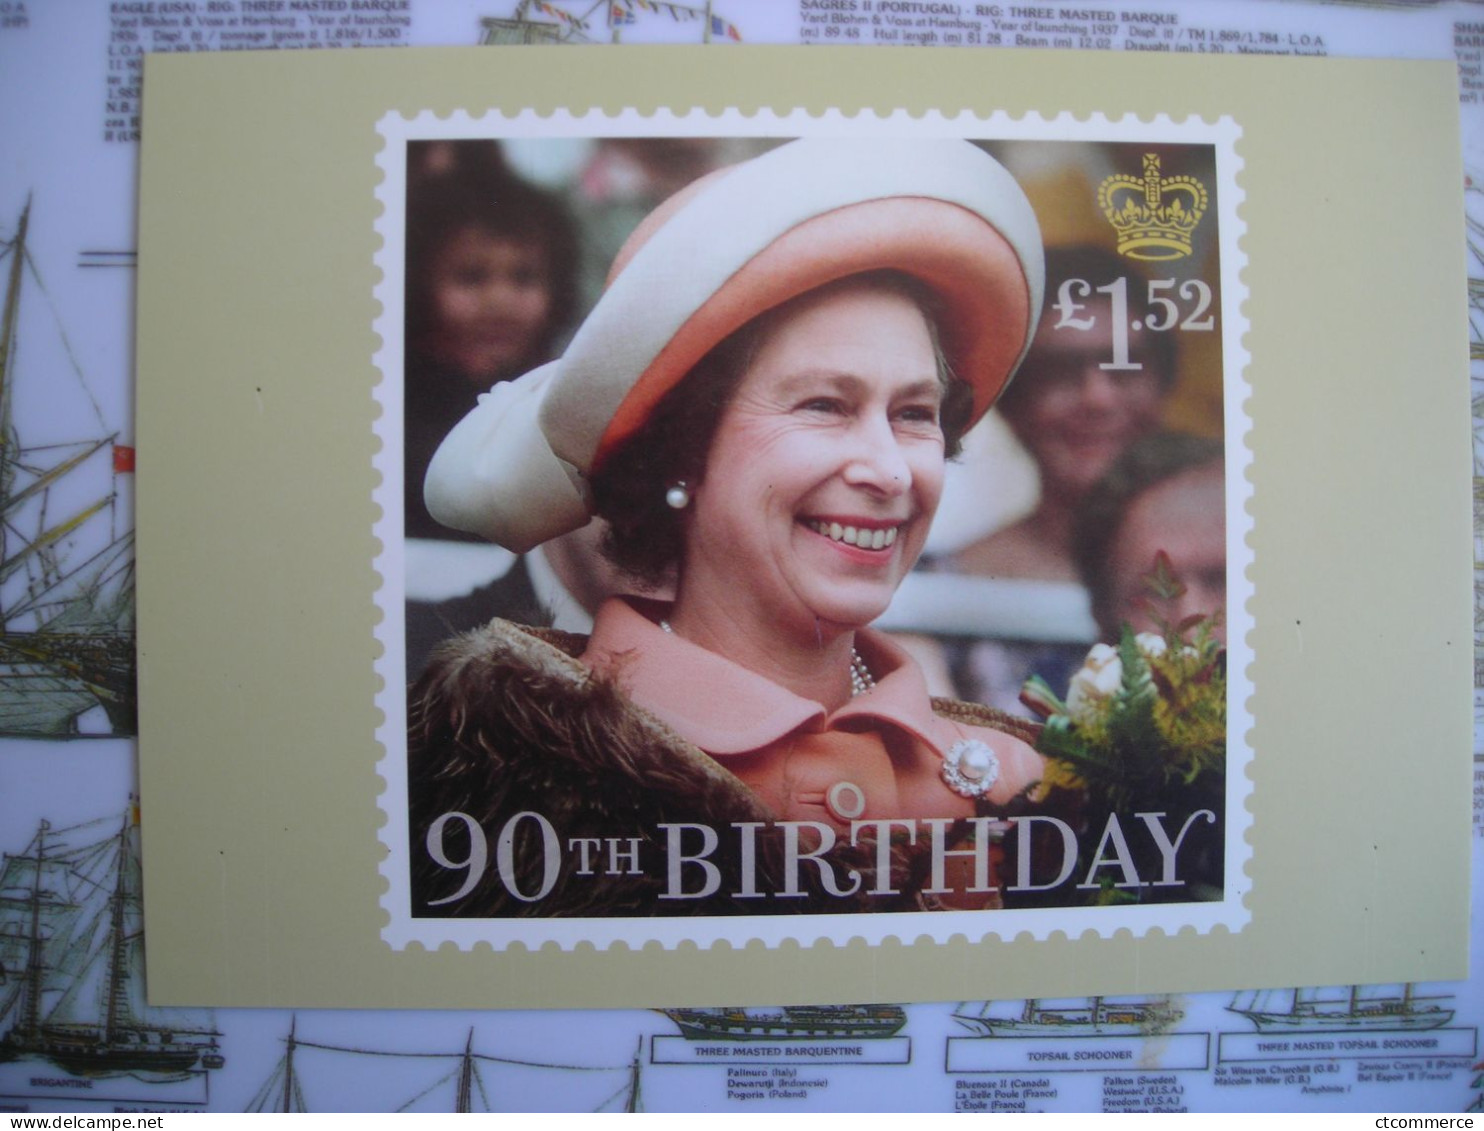 PHQ Queen's 90th birthday, 90e de la Reine, 7 postcards, 7 cartes postale